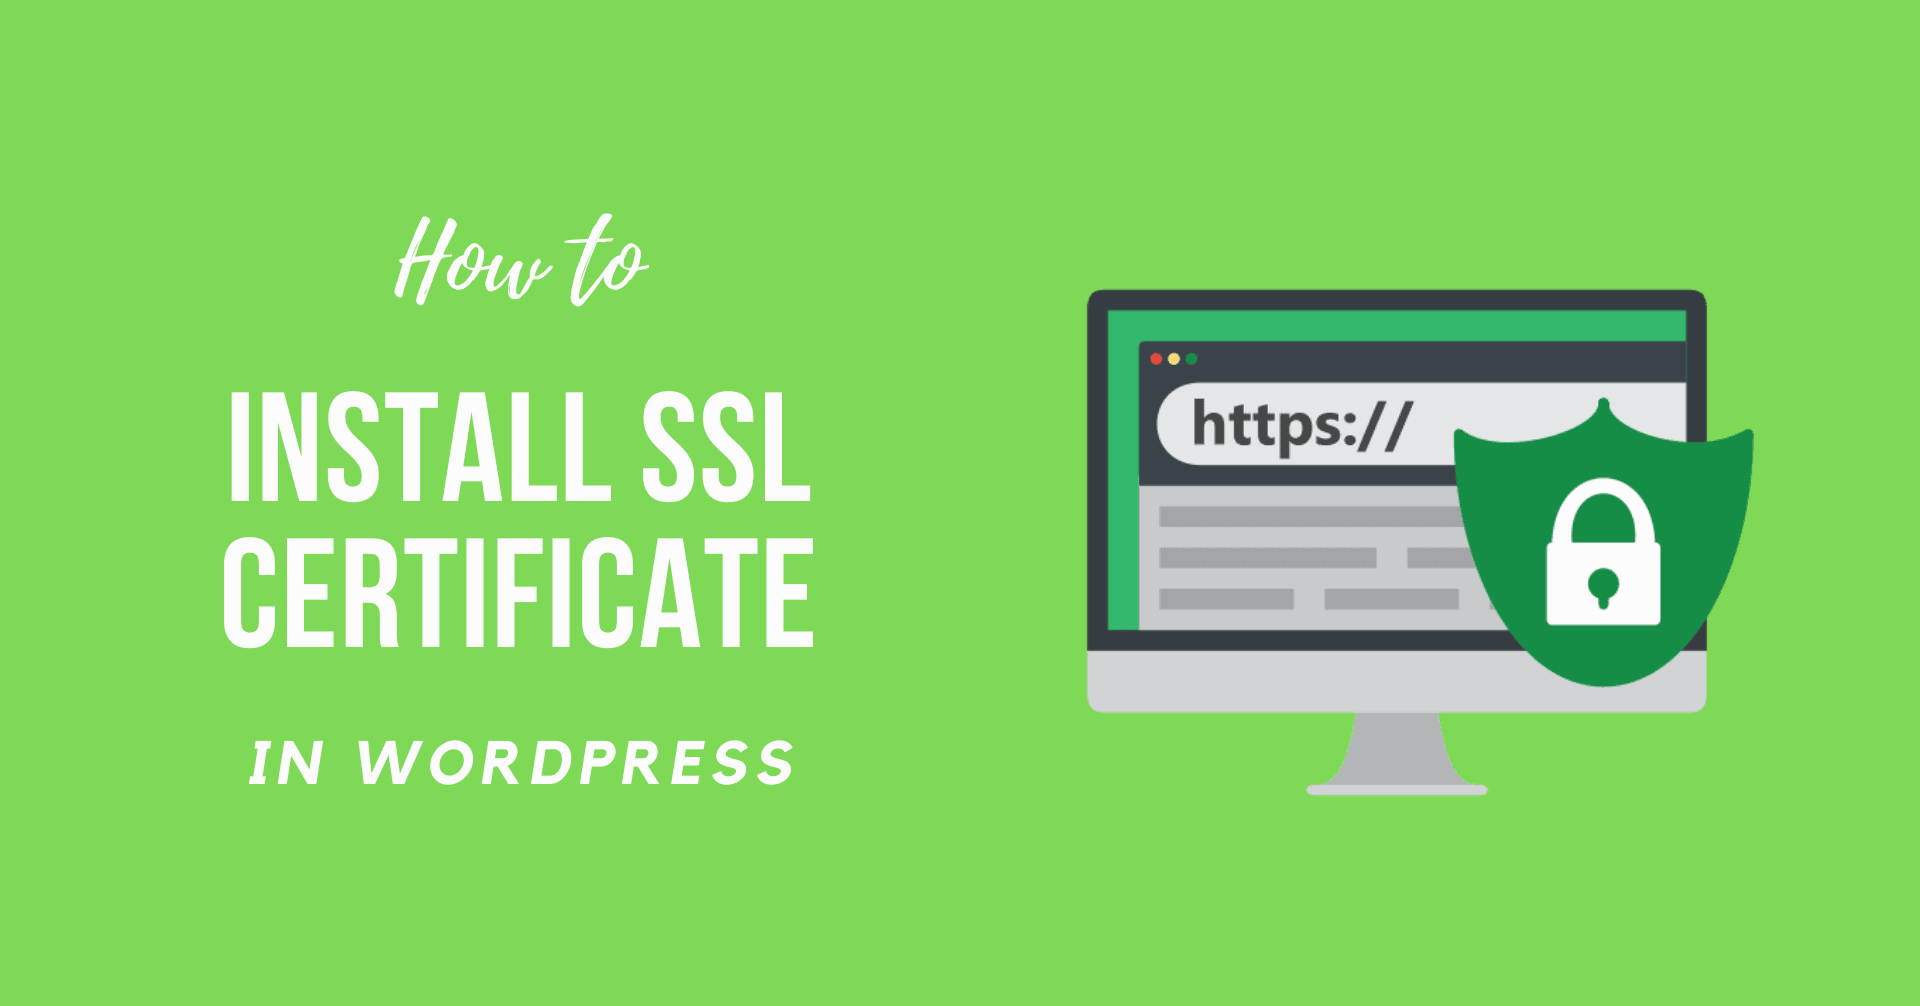 How to Install SSL Certificate WordPress Using Plugin